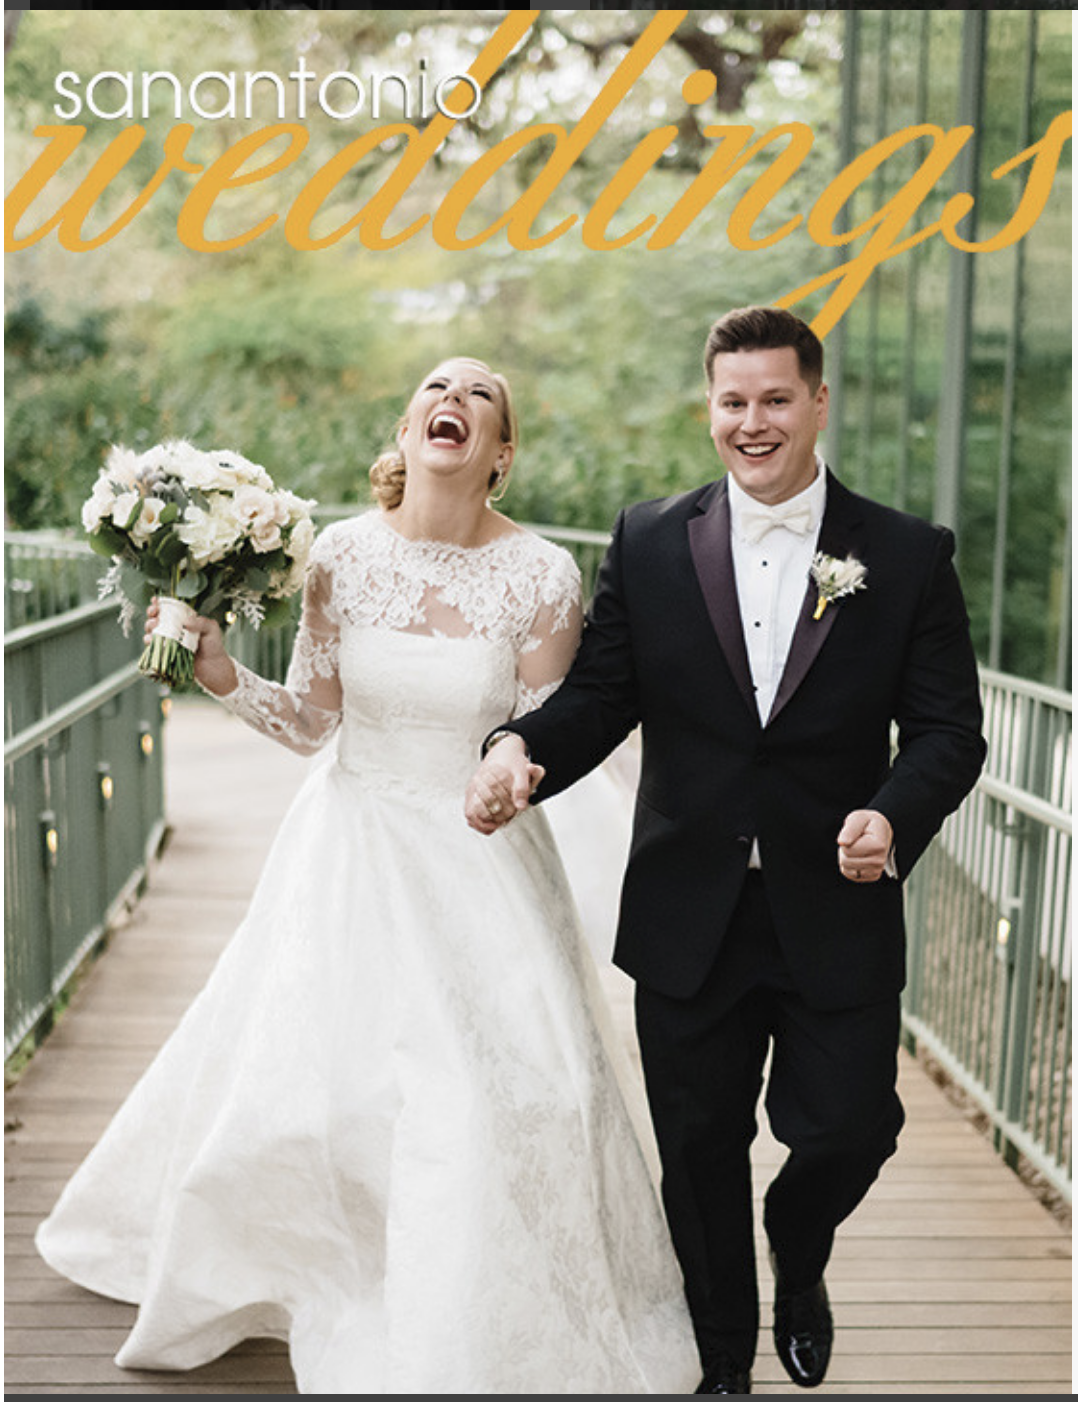 The annual San Antonio Weddings Magazine 2020 Cover Contest is now LIVE!